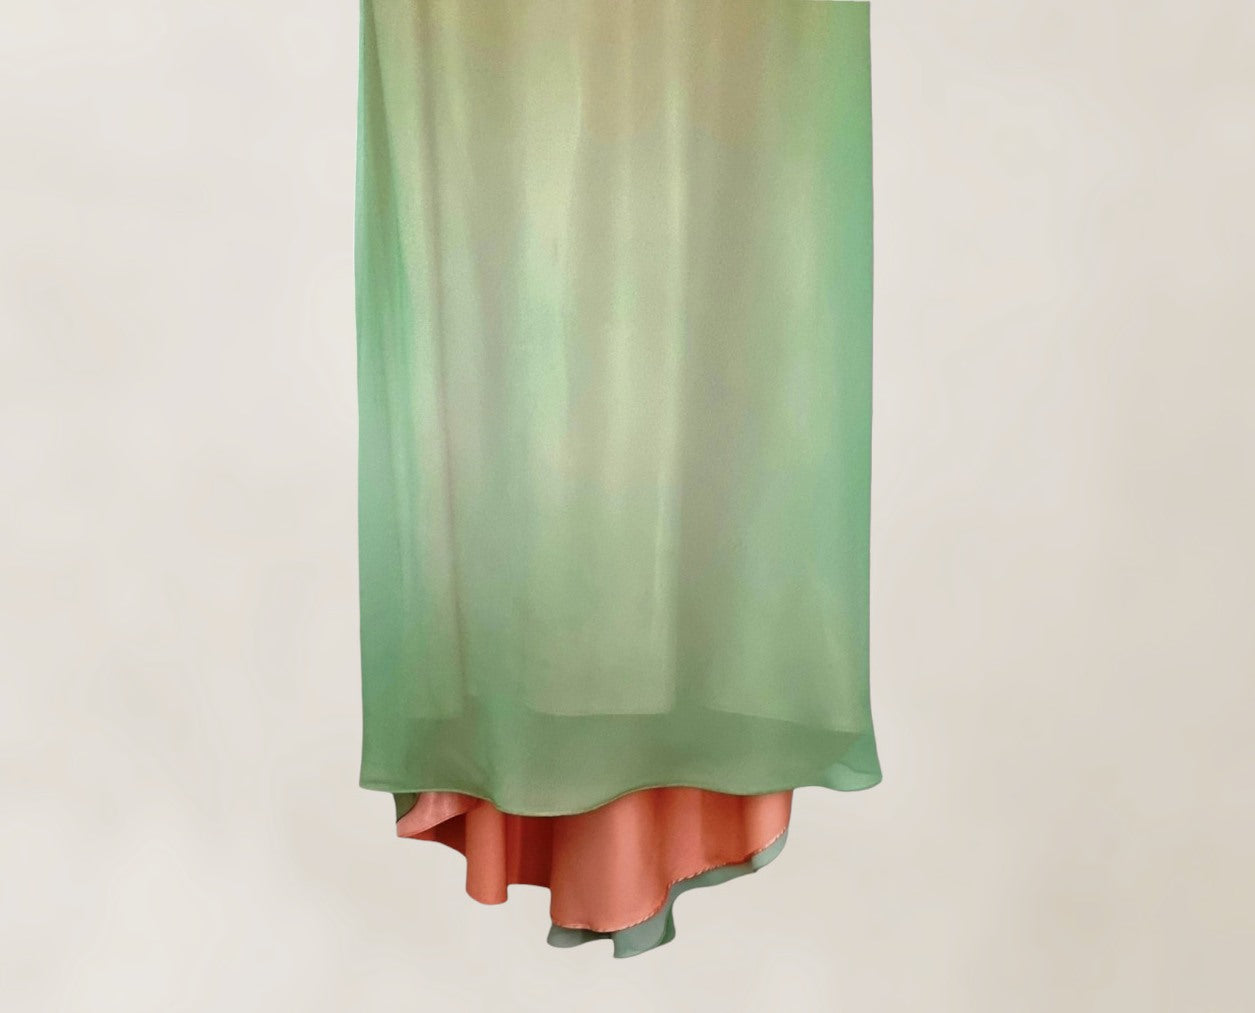 Faviana Couture Peach & Green Fish Tail Maxi Dress UK 6 US 2 EU 34 IT38 Timeless Fashions